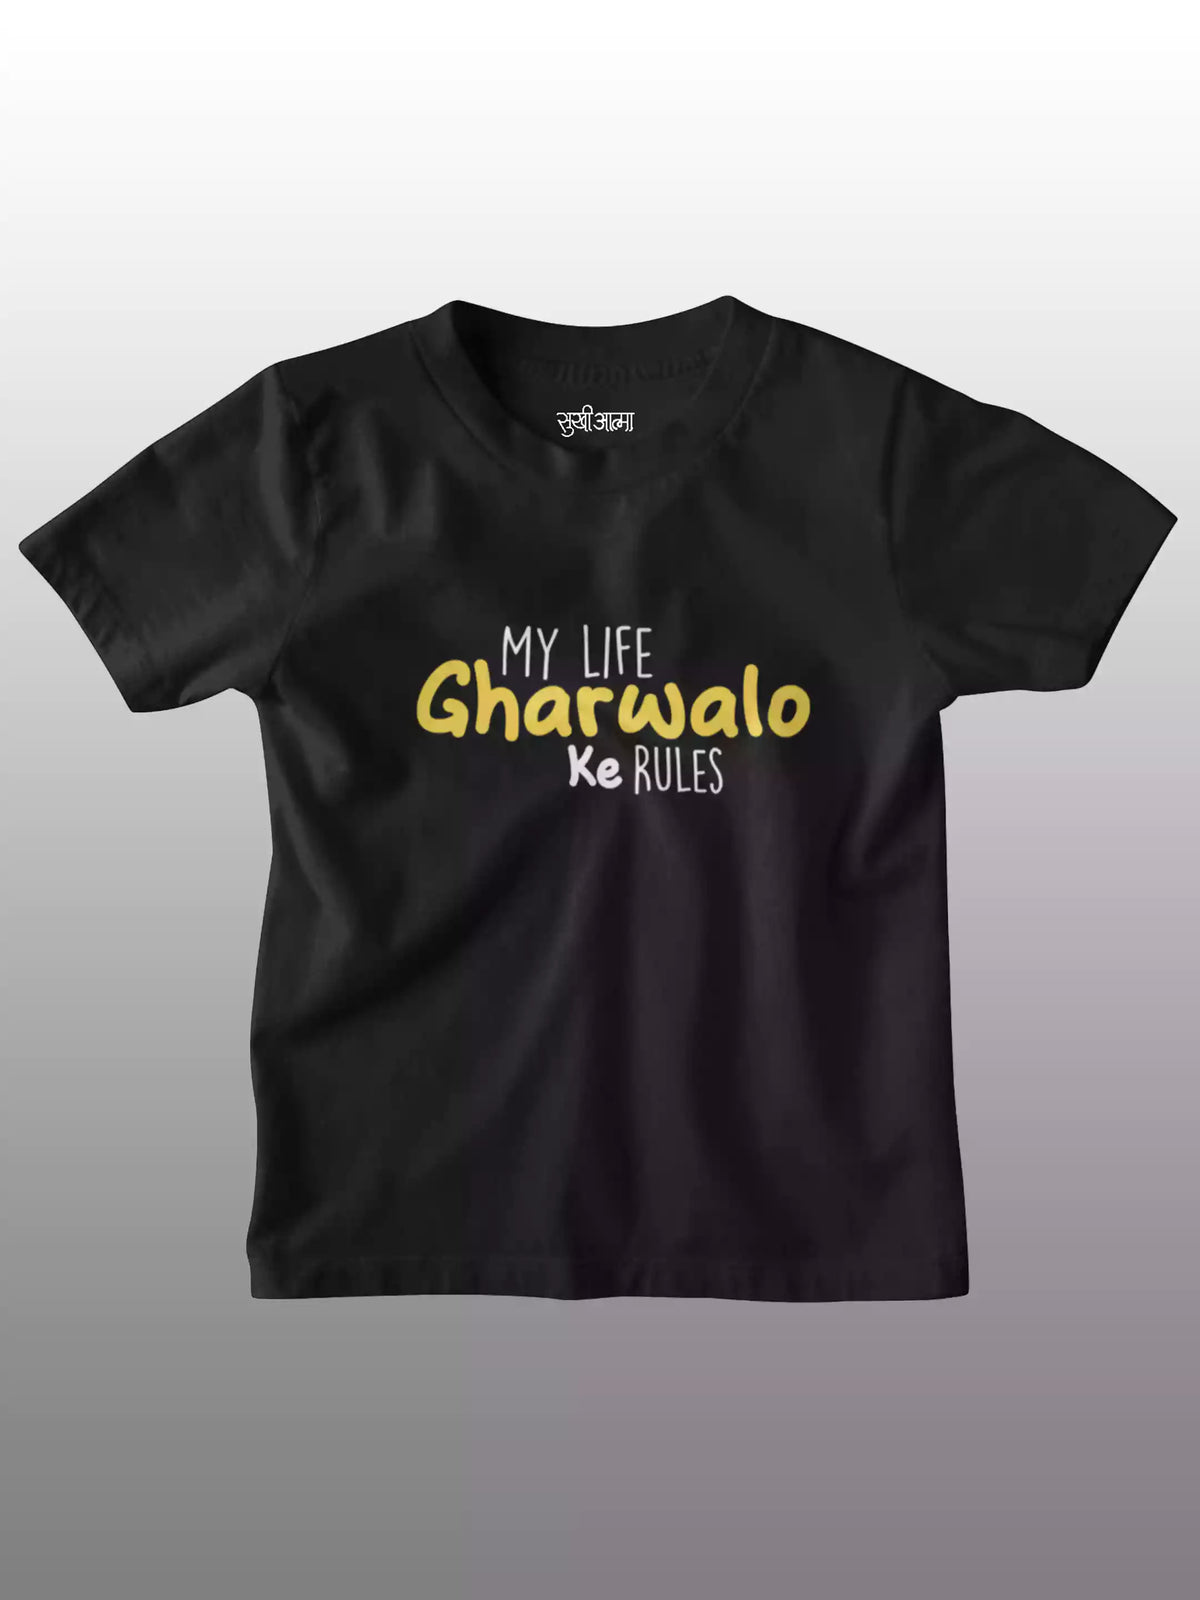 Gharwalo ke Rules - Sukhiaatma Unisex Graphic Printed Kids Black T-shirt